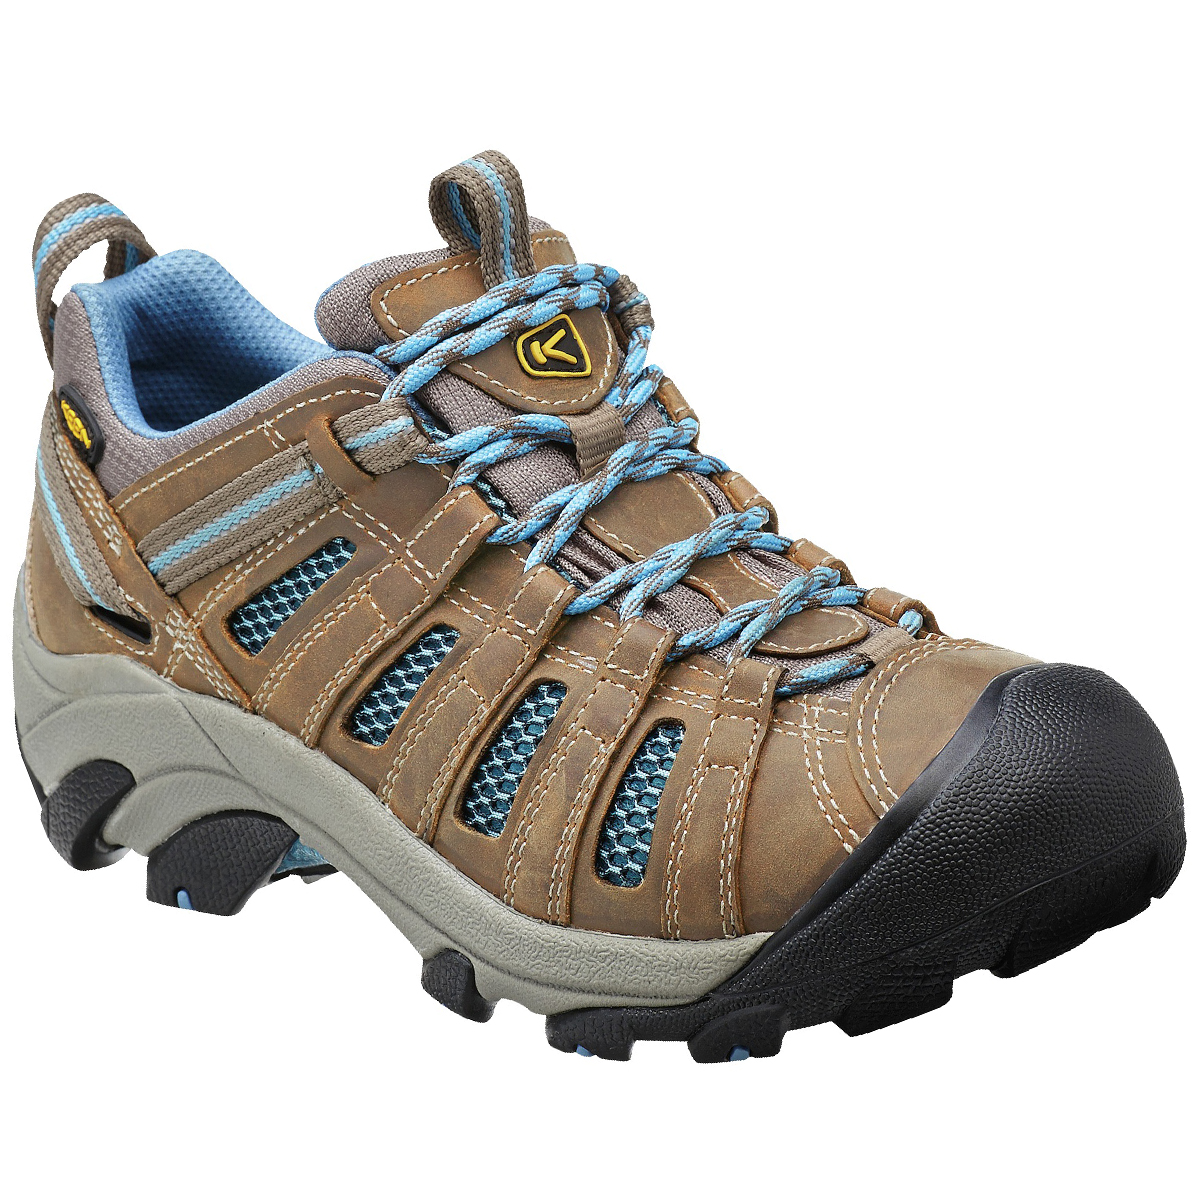 Keen Women's Voyageur Hiking Shoes - Size 11